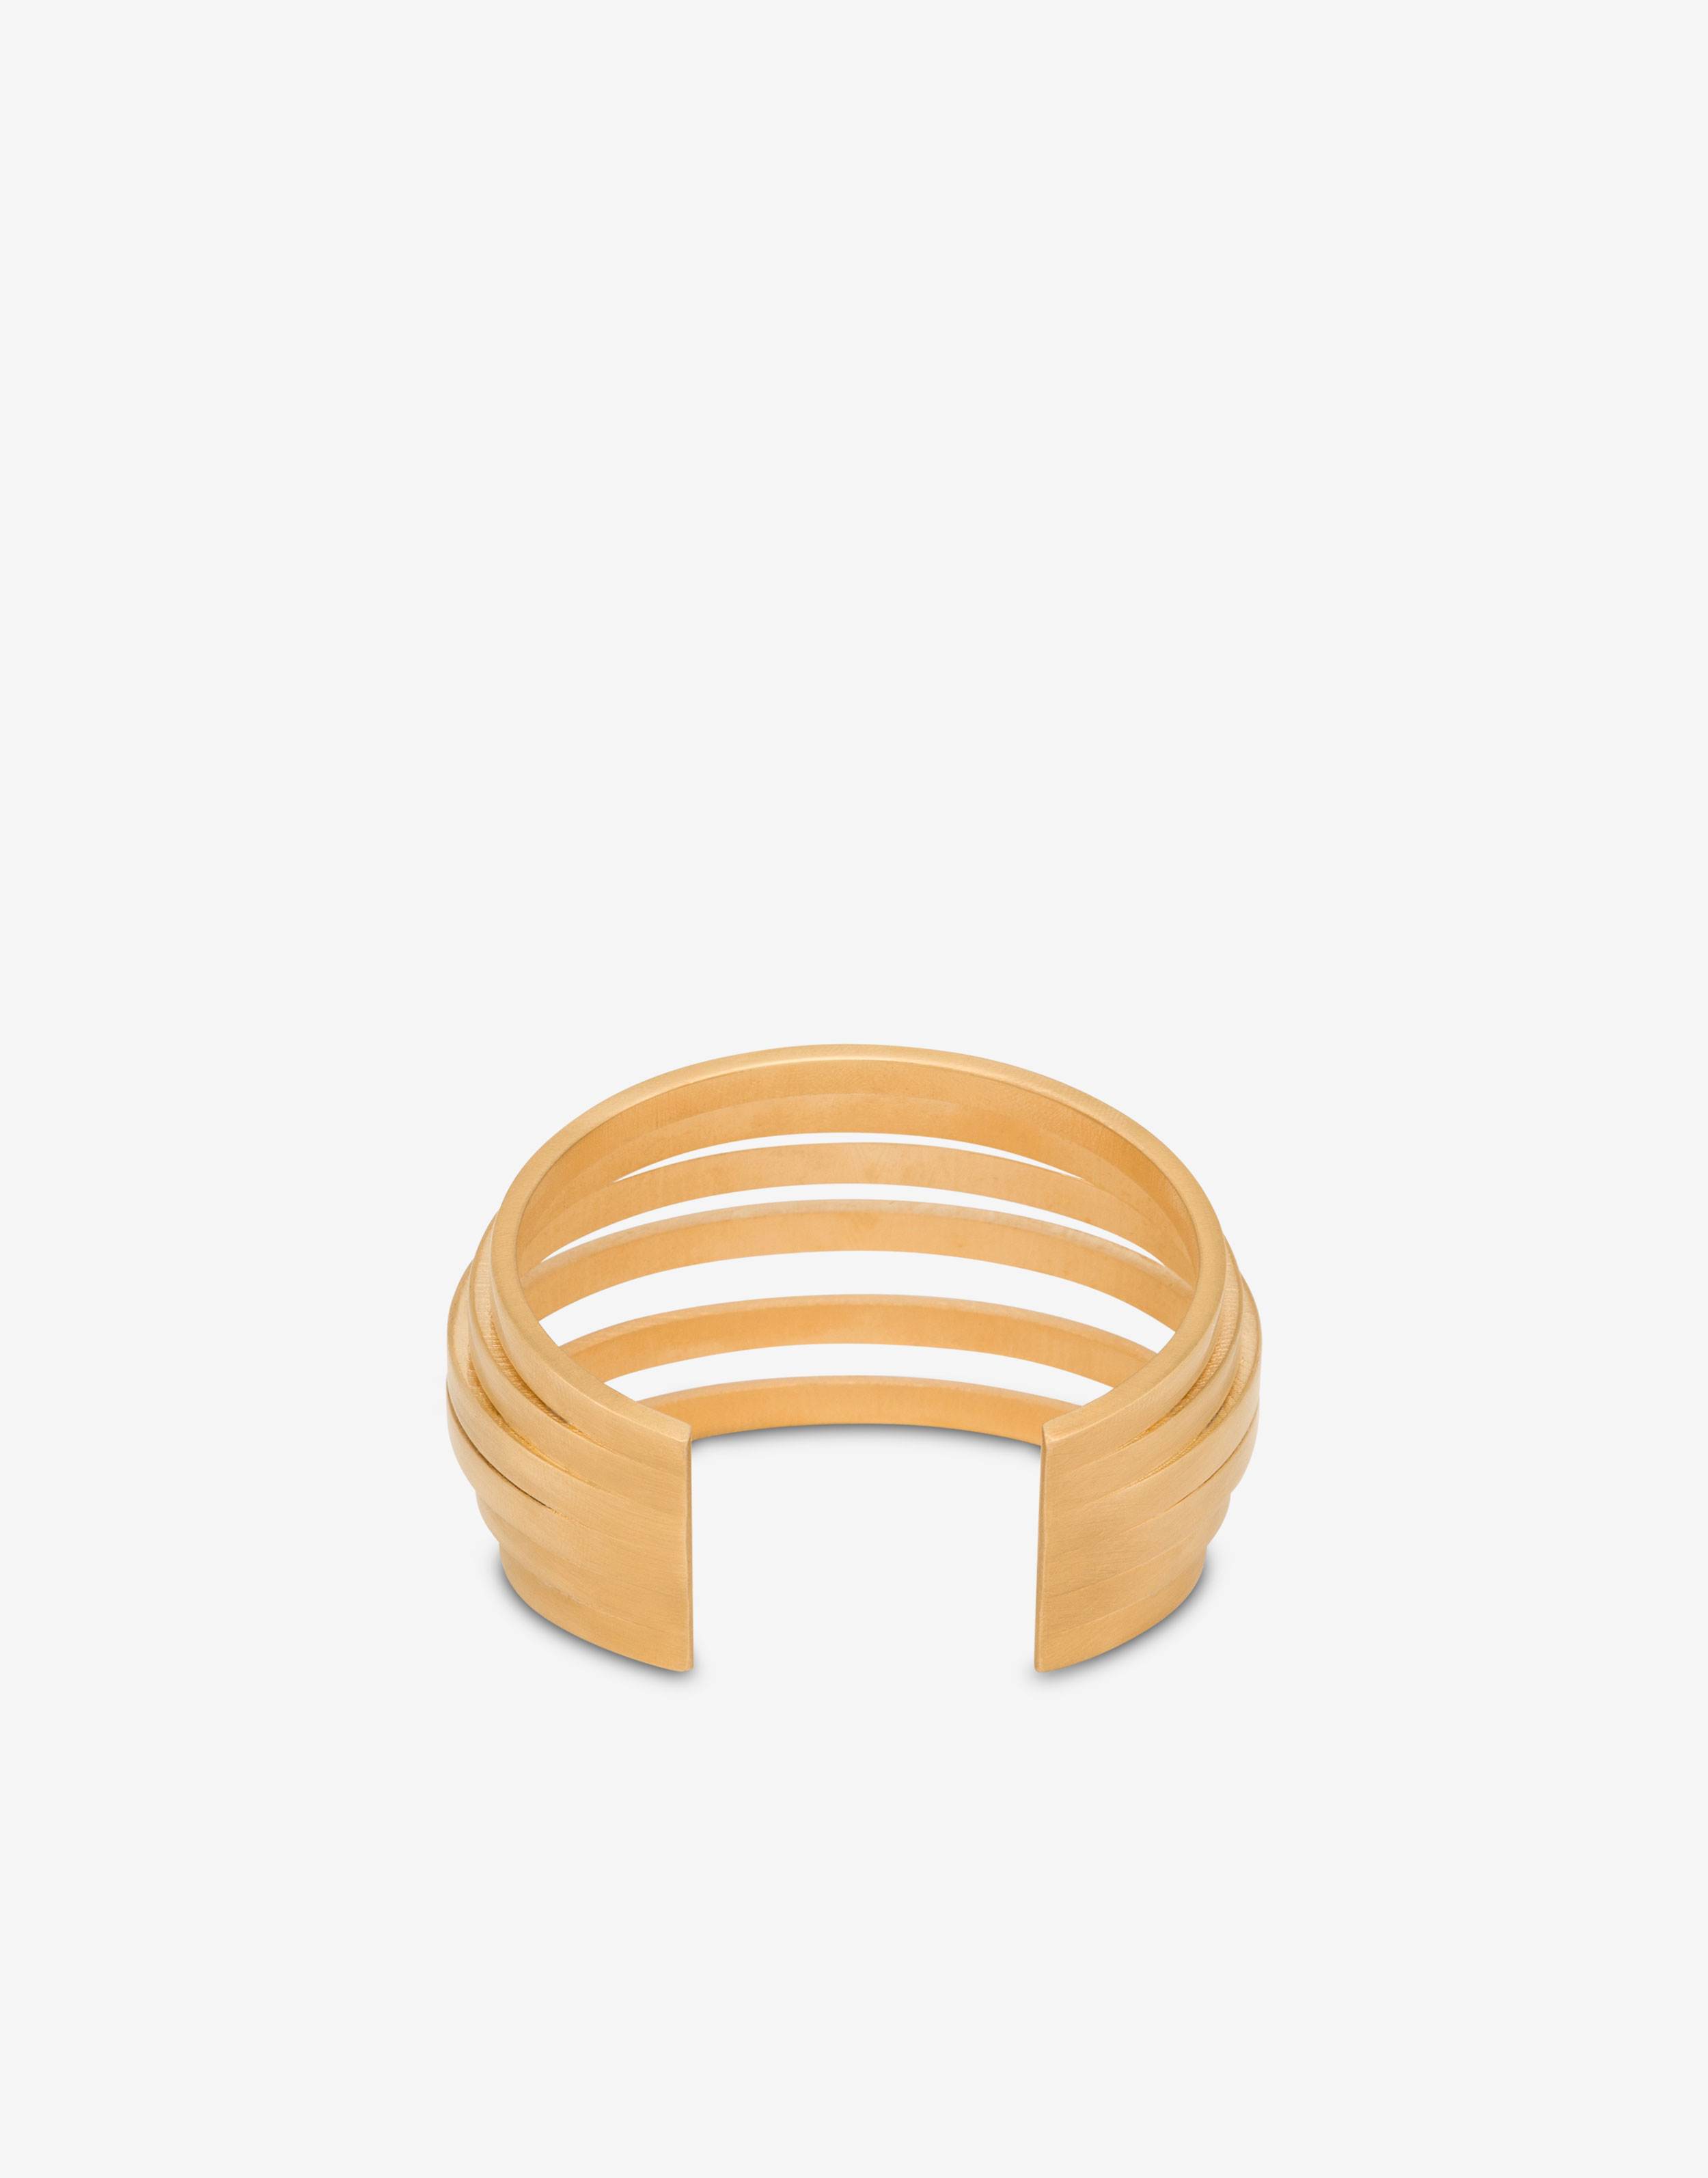 Bracelet in gold metal